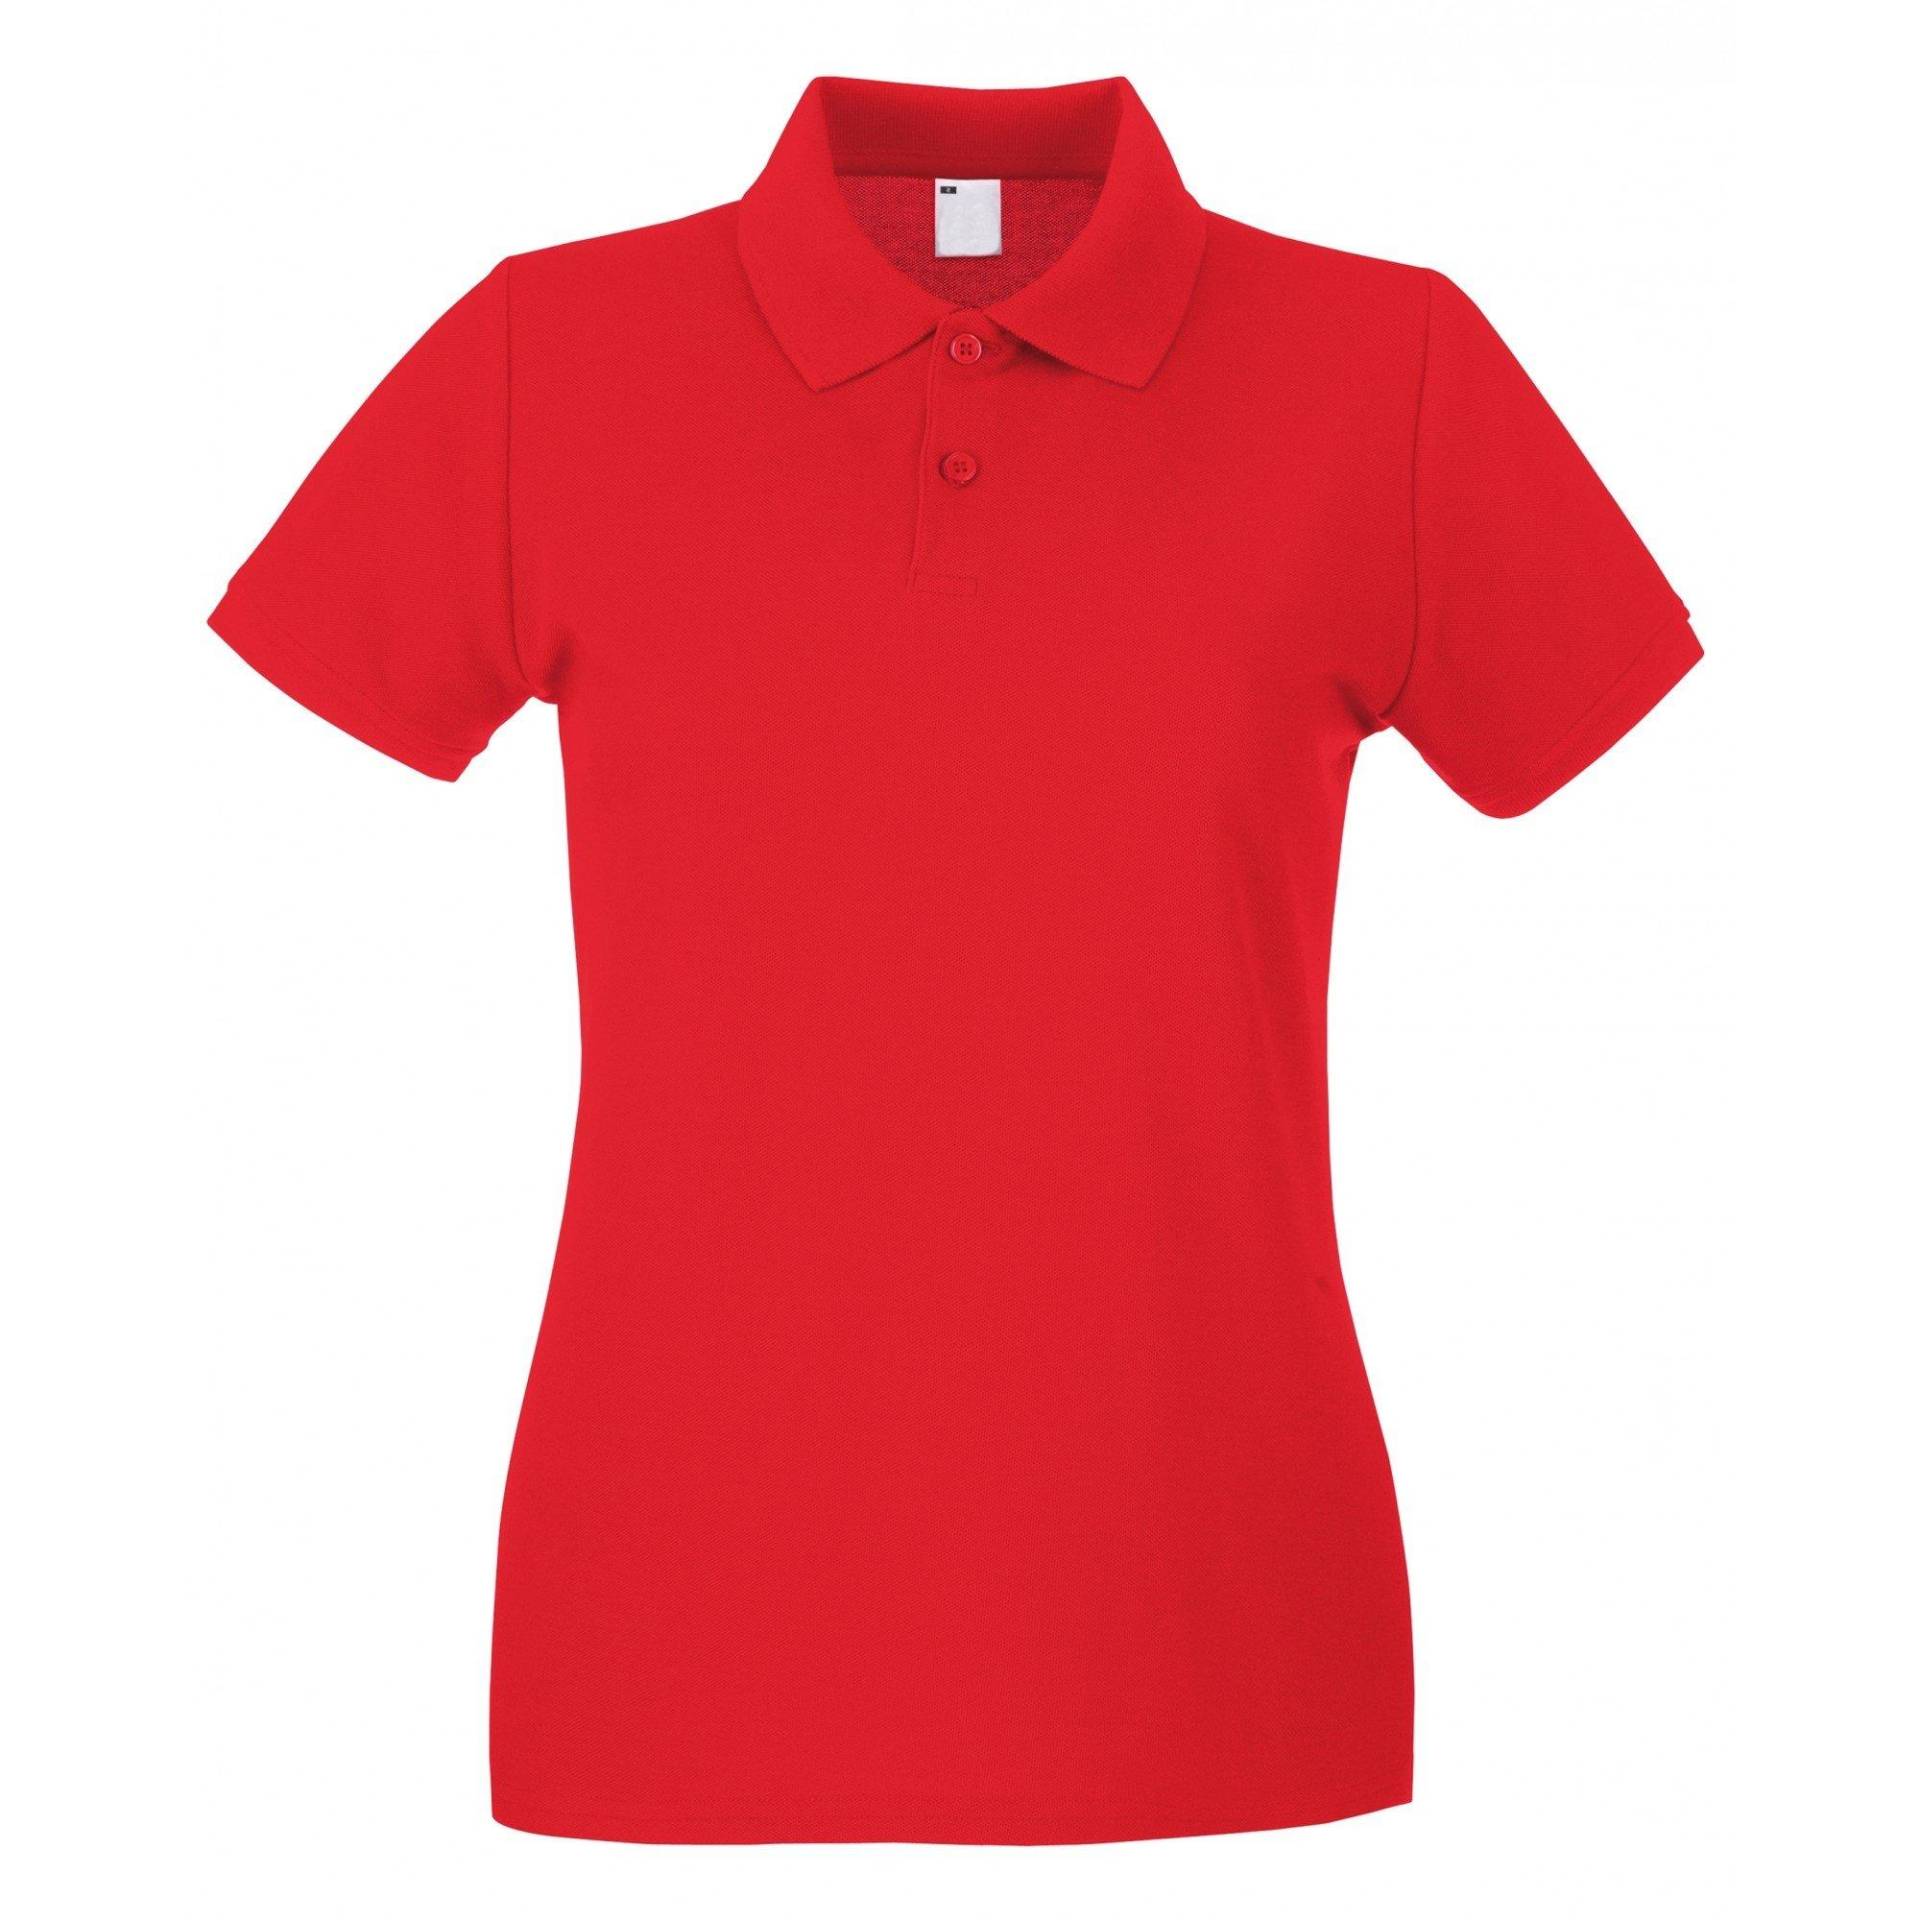 Poloshirt, Figurbetont, Kurzärmlig Damen Rot Bunt XS von Universal Textiles